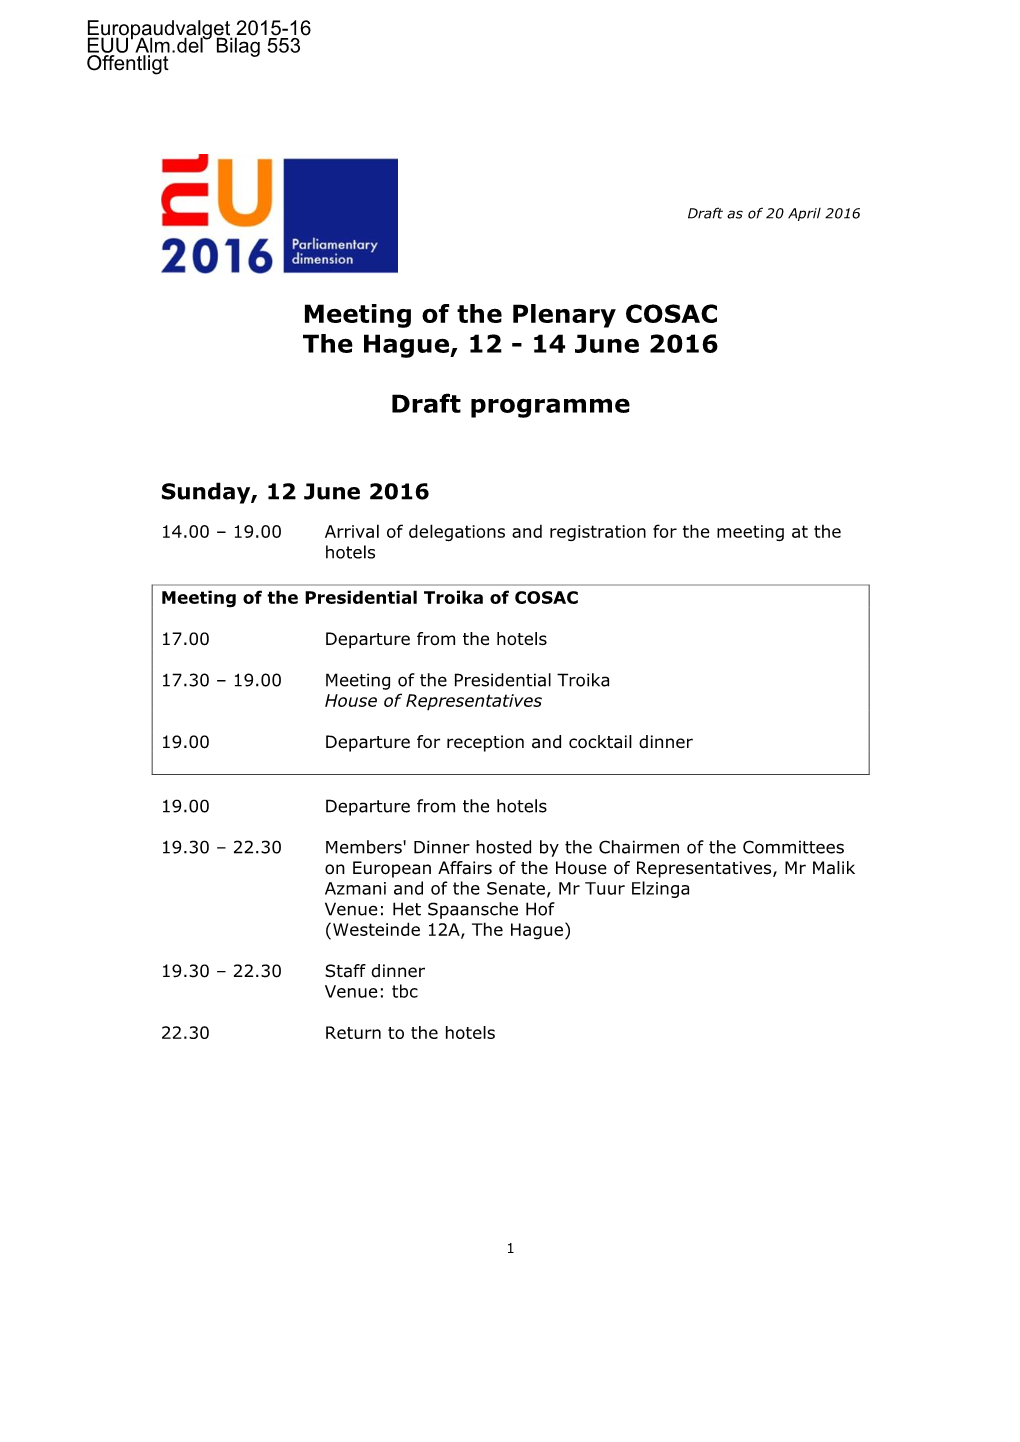 Meeting of the Plenary COSAC the Hague, 12 - 14 June 2016